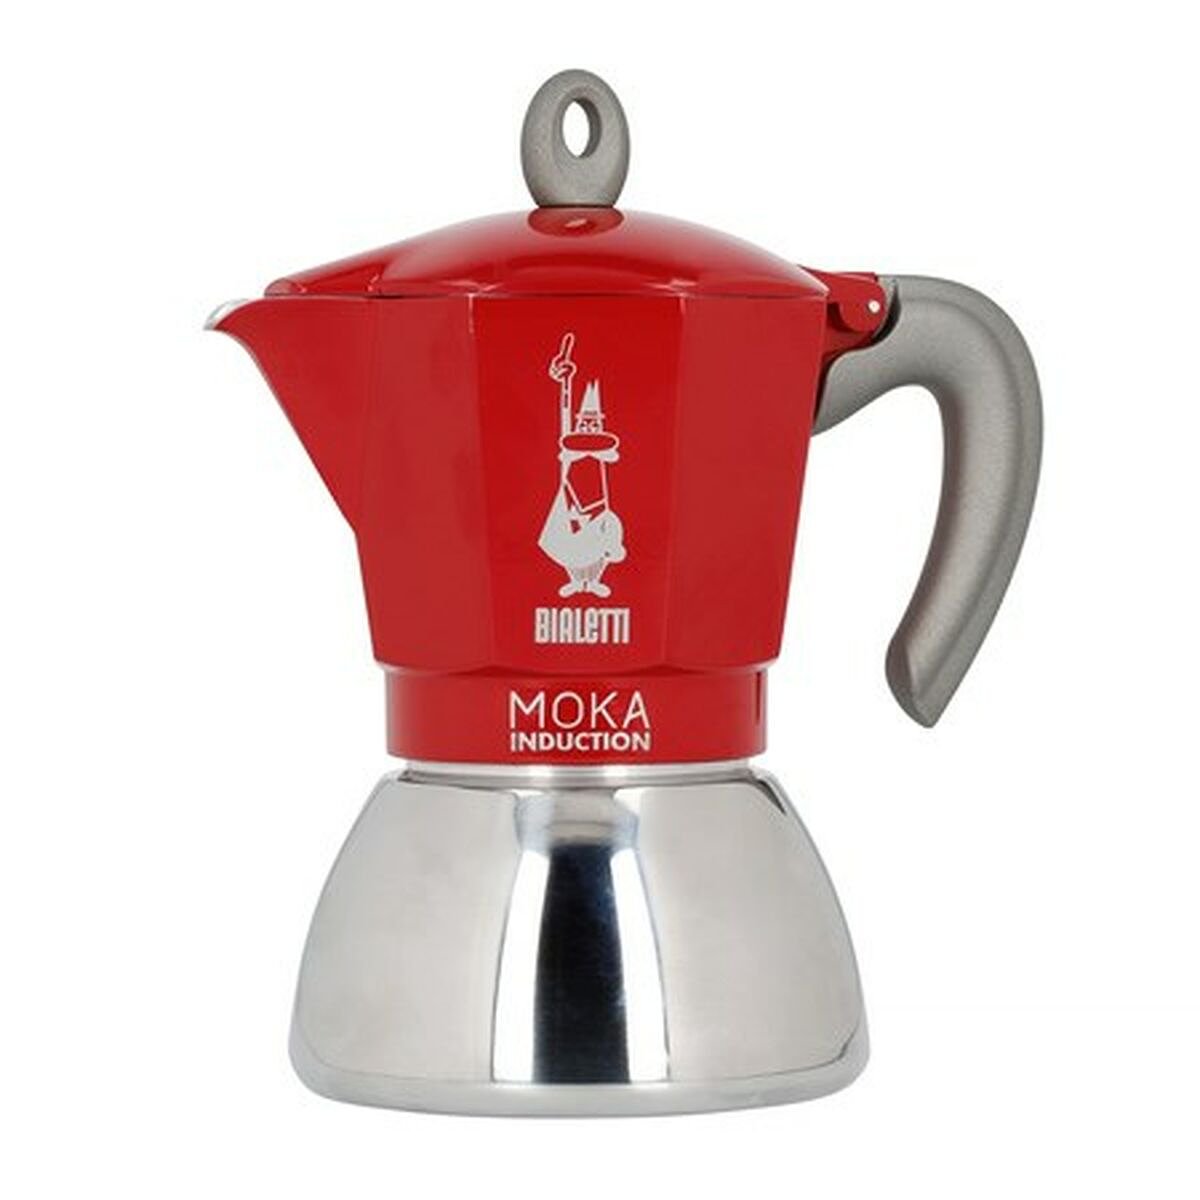 Italiaanse Koffiepot Bialetti Moka Induction Zwart Rood Metaal Roestvrij staal Aluminium 300 ml 6 Ko